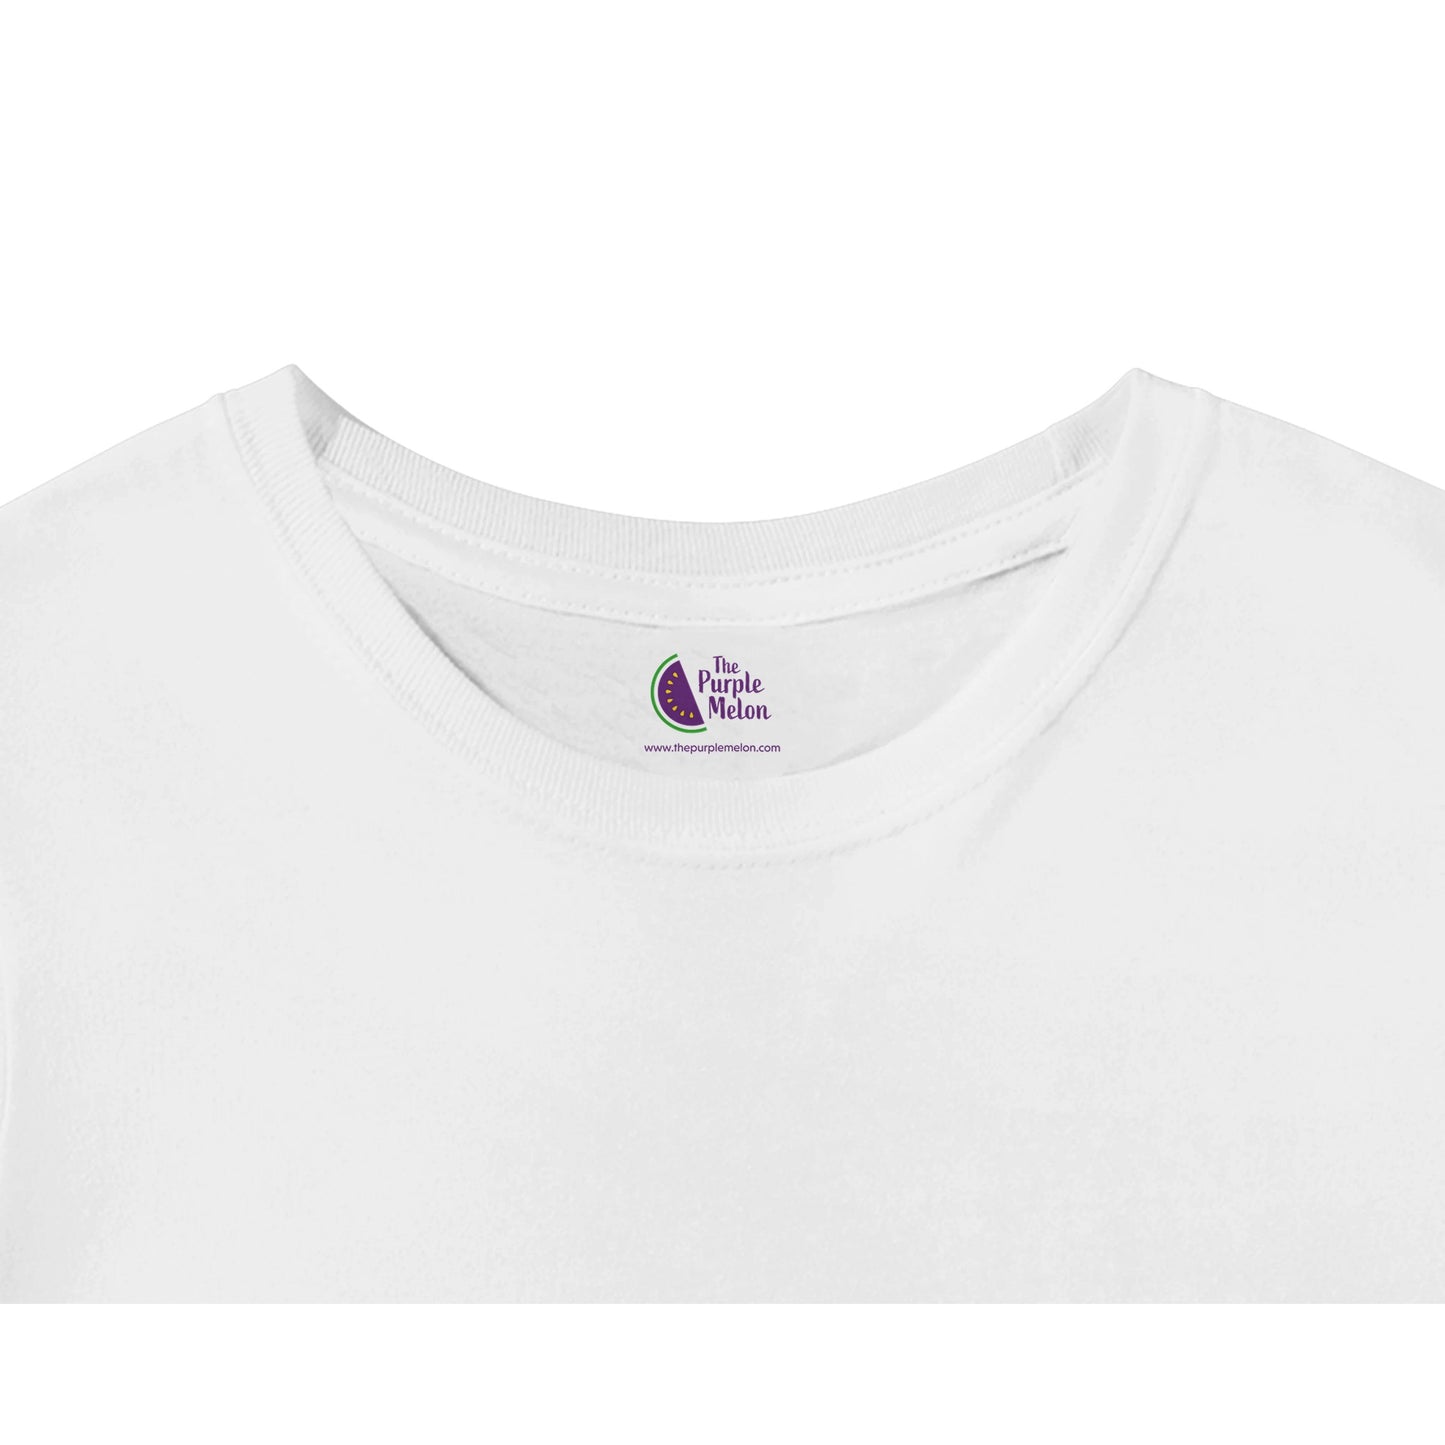 white t-shirt neck label with The Purple Melon logo